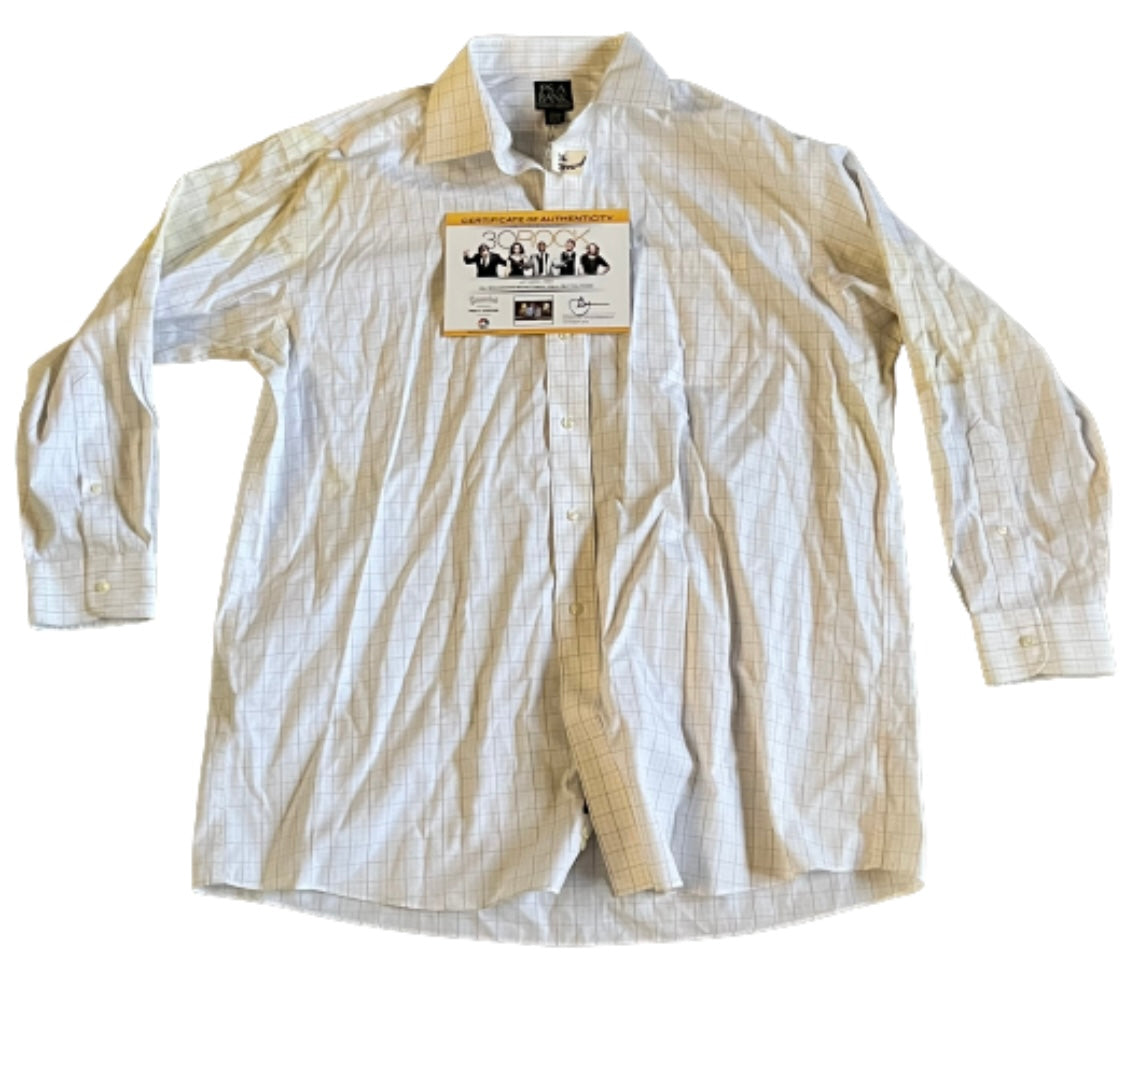 30 Rock: Dr Speaceman's HERO Long Sleeve Shirt (L)